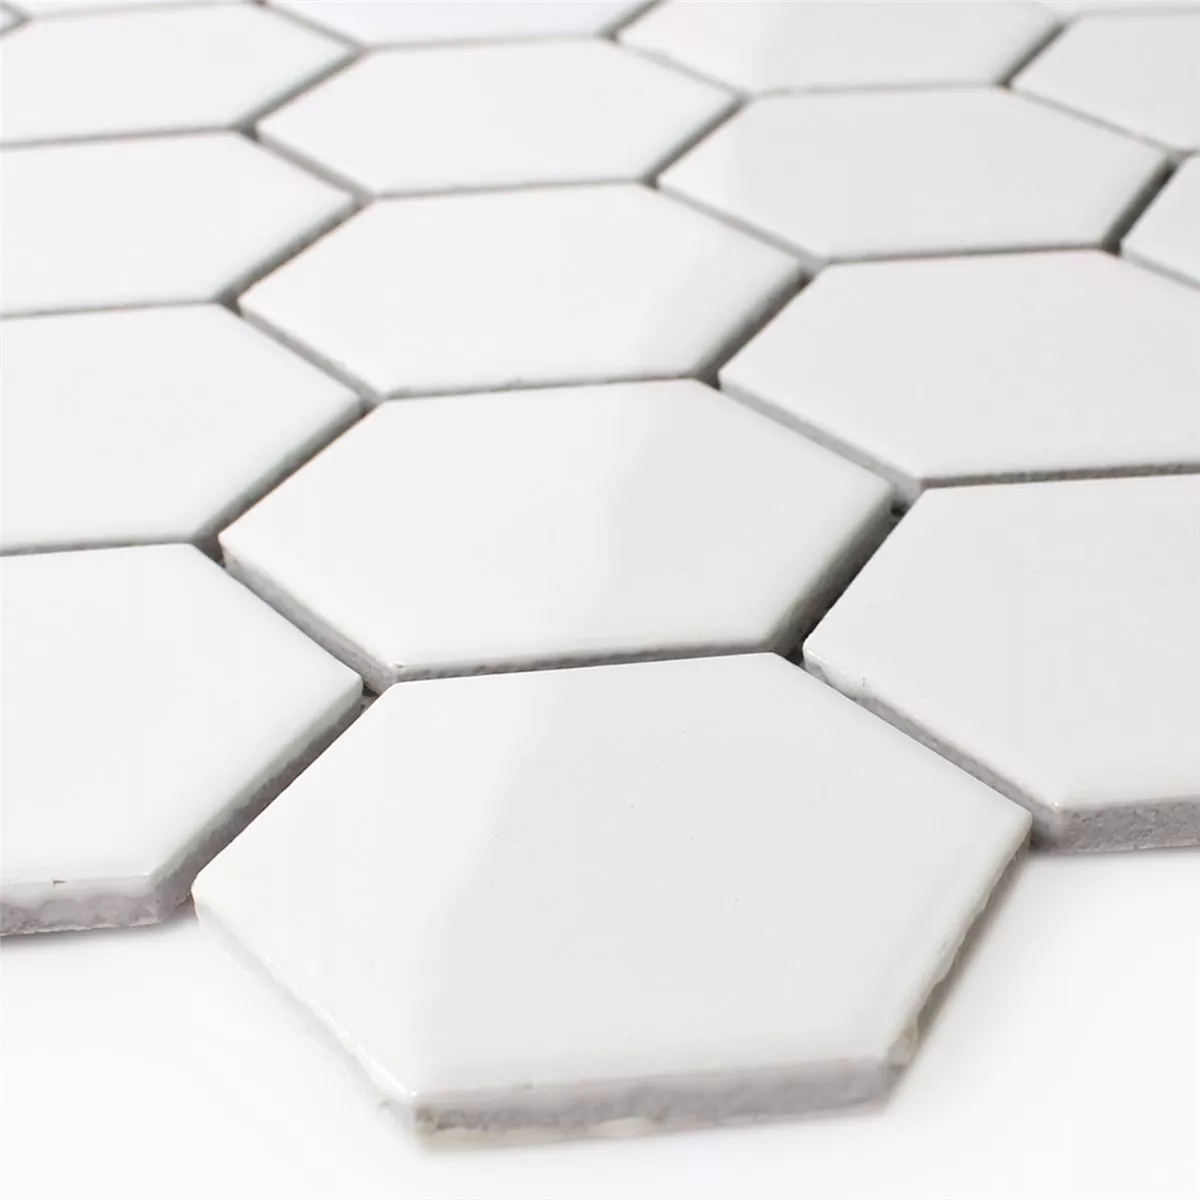 Sample Mosaic Tiles Ceramic Hexagon White Glossy